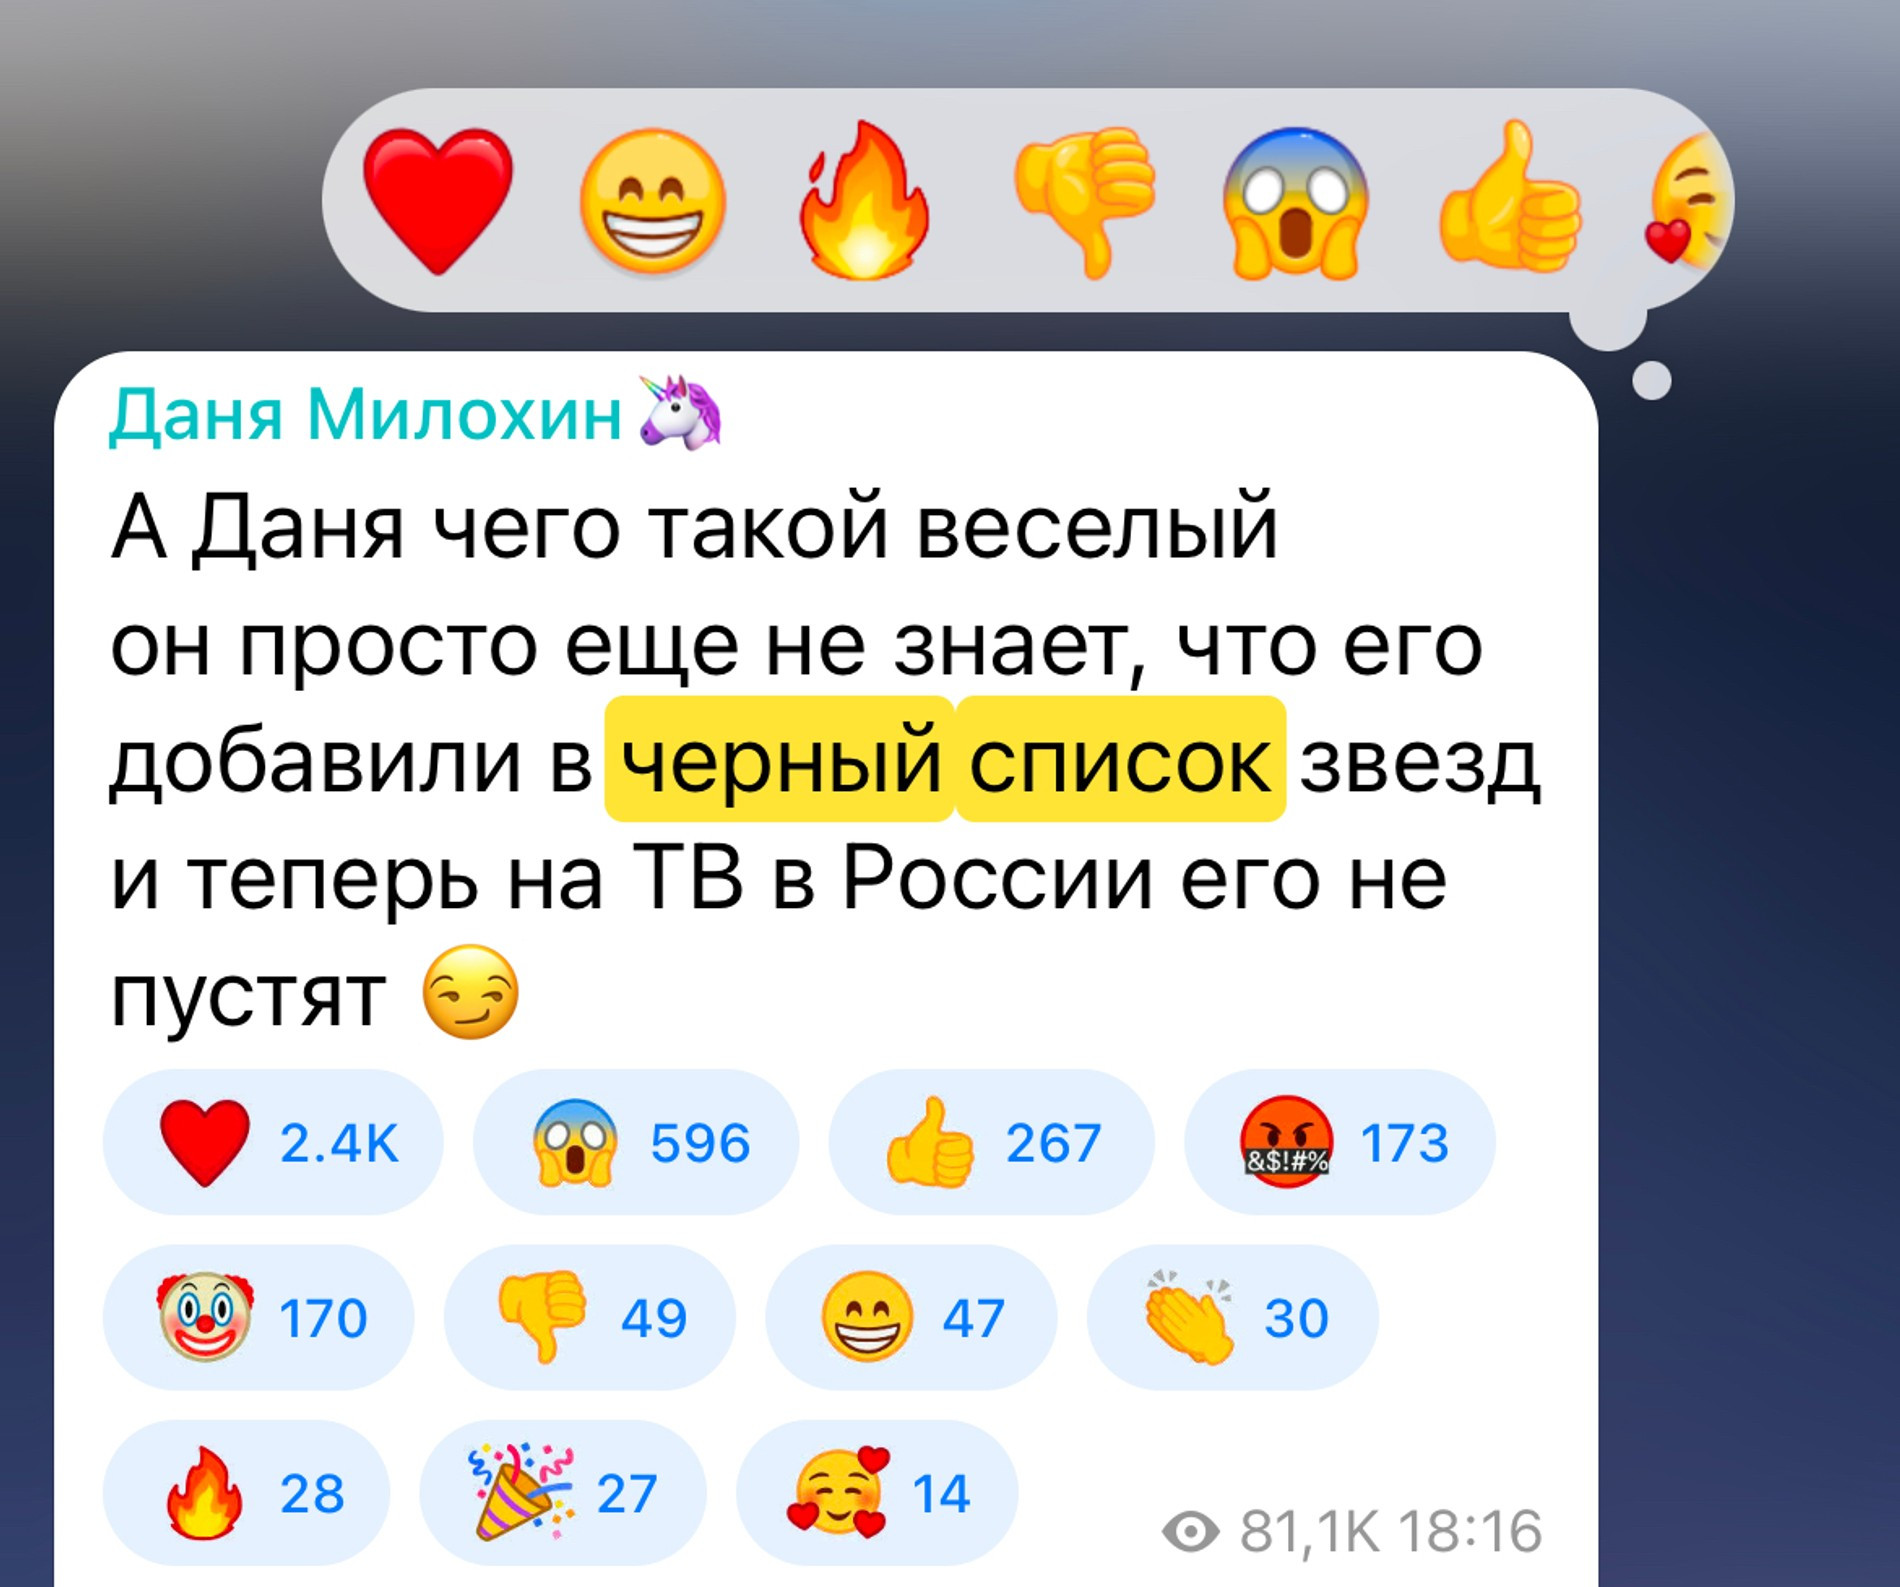 Даня Милохин о черном списке на ТВ
Фото: телеграм-канал тиктокера